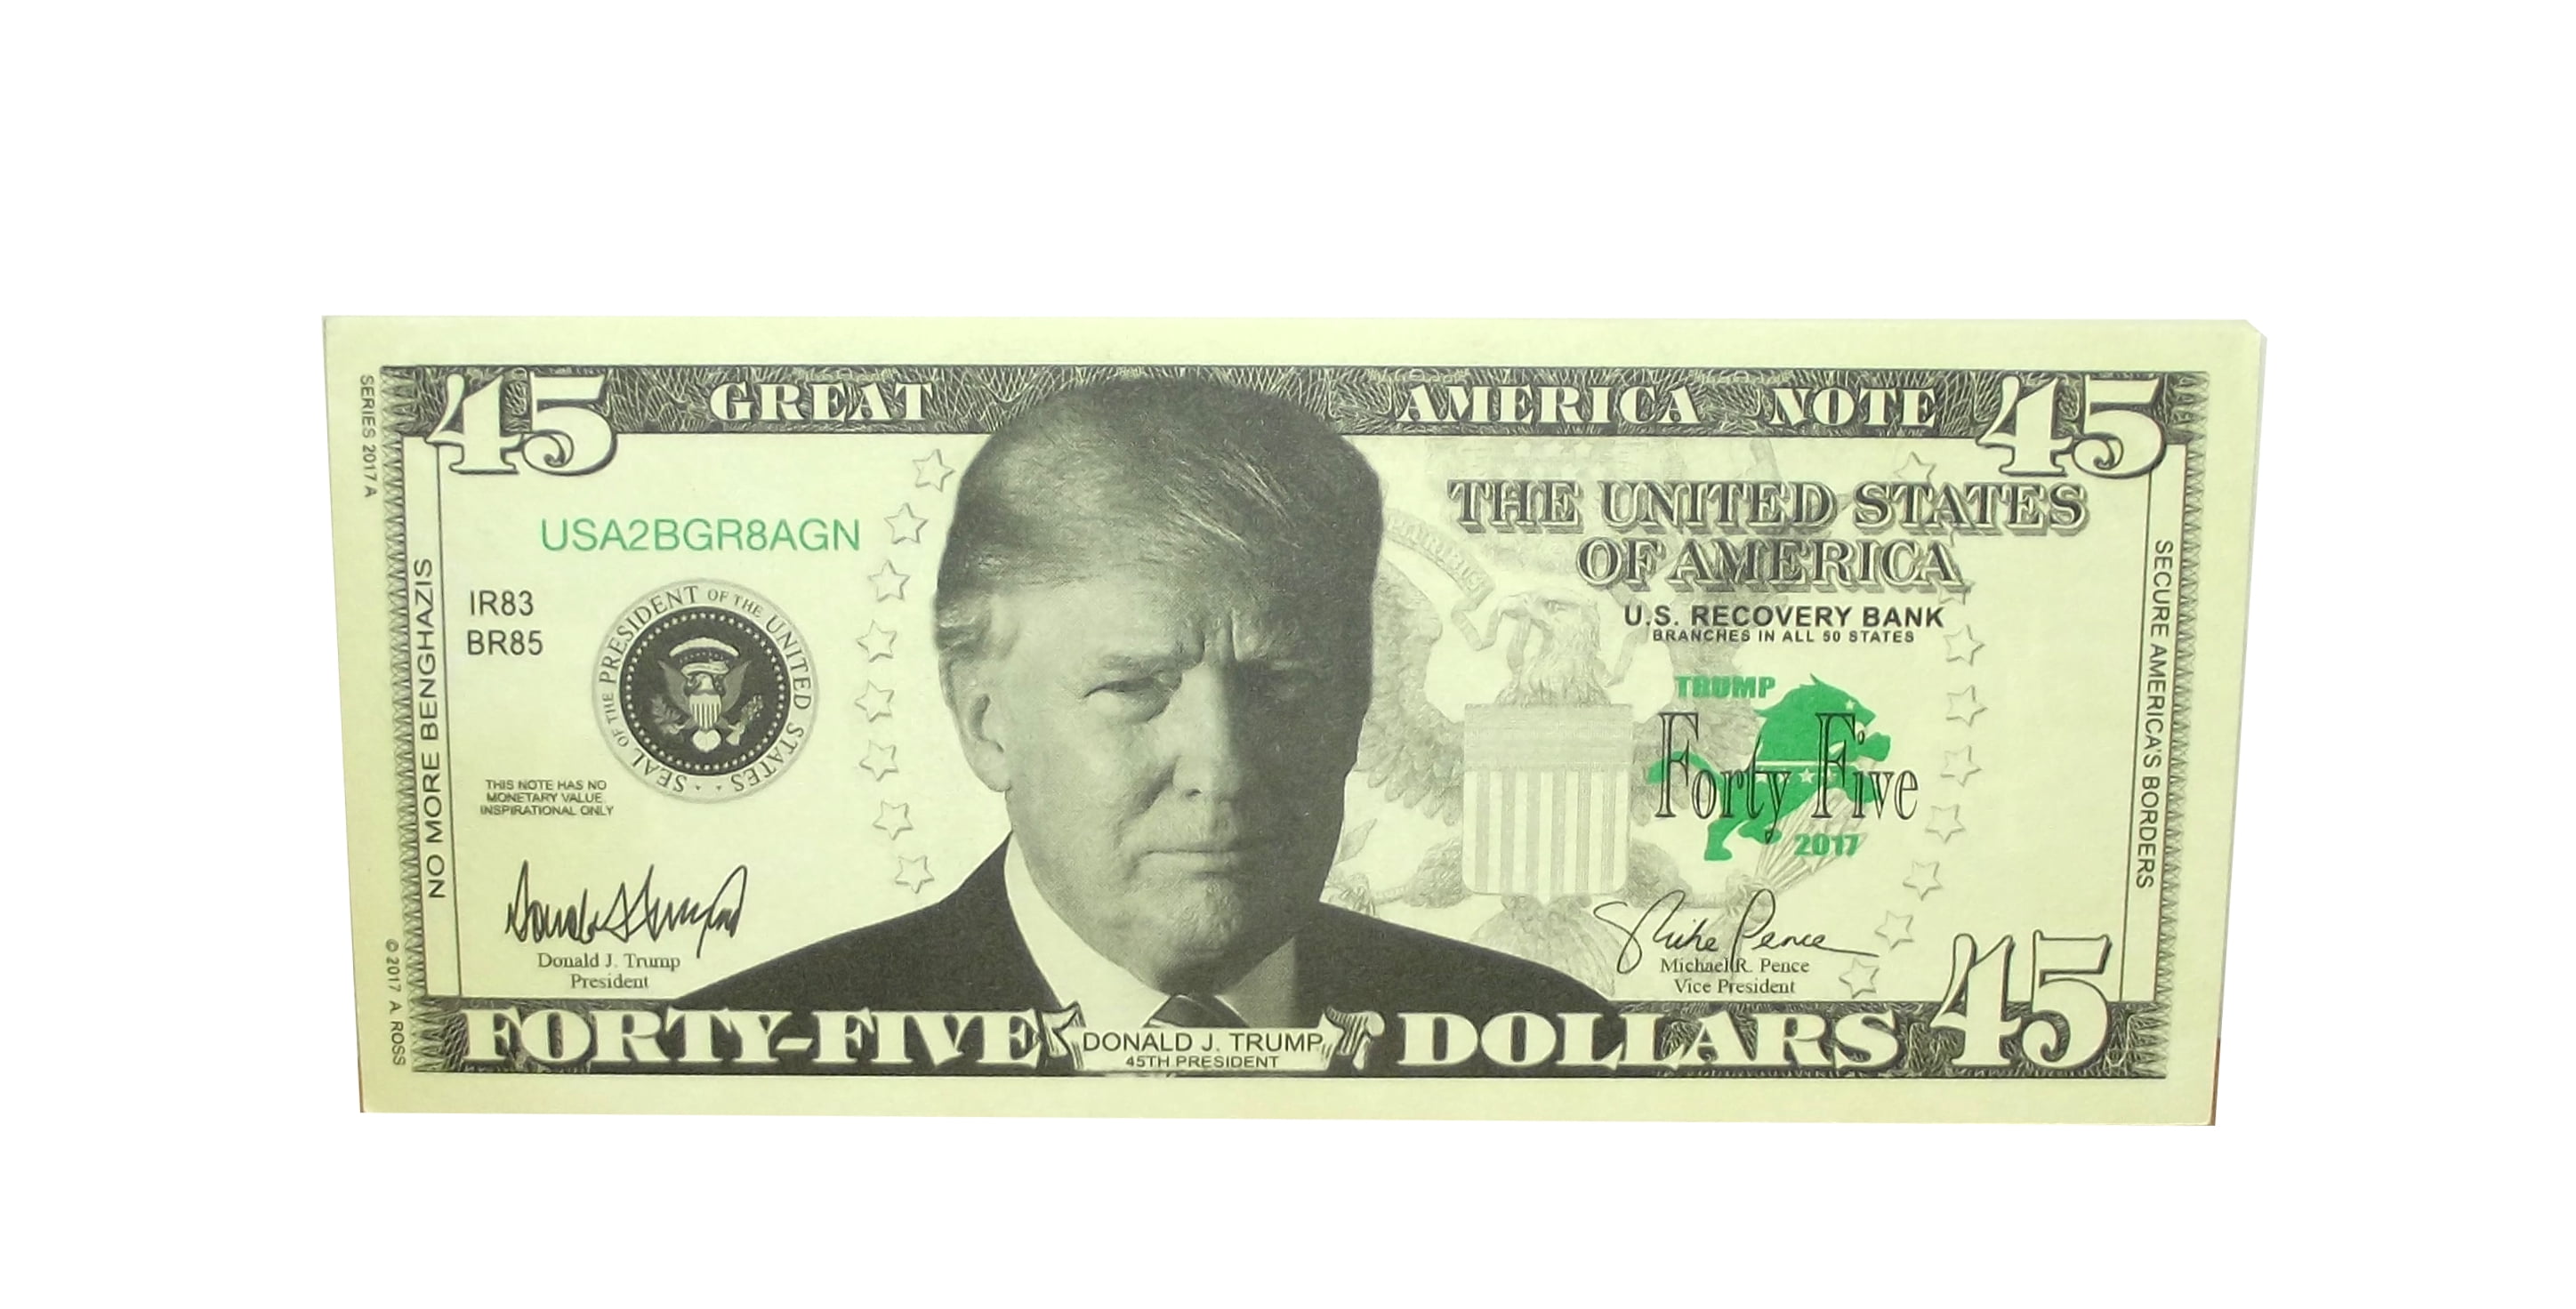 Donald Trump 45th President Dollar Bill-W/clear protector sleeve  I2 1 